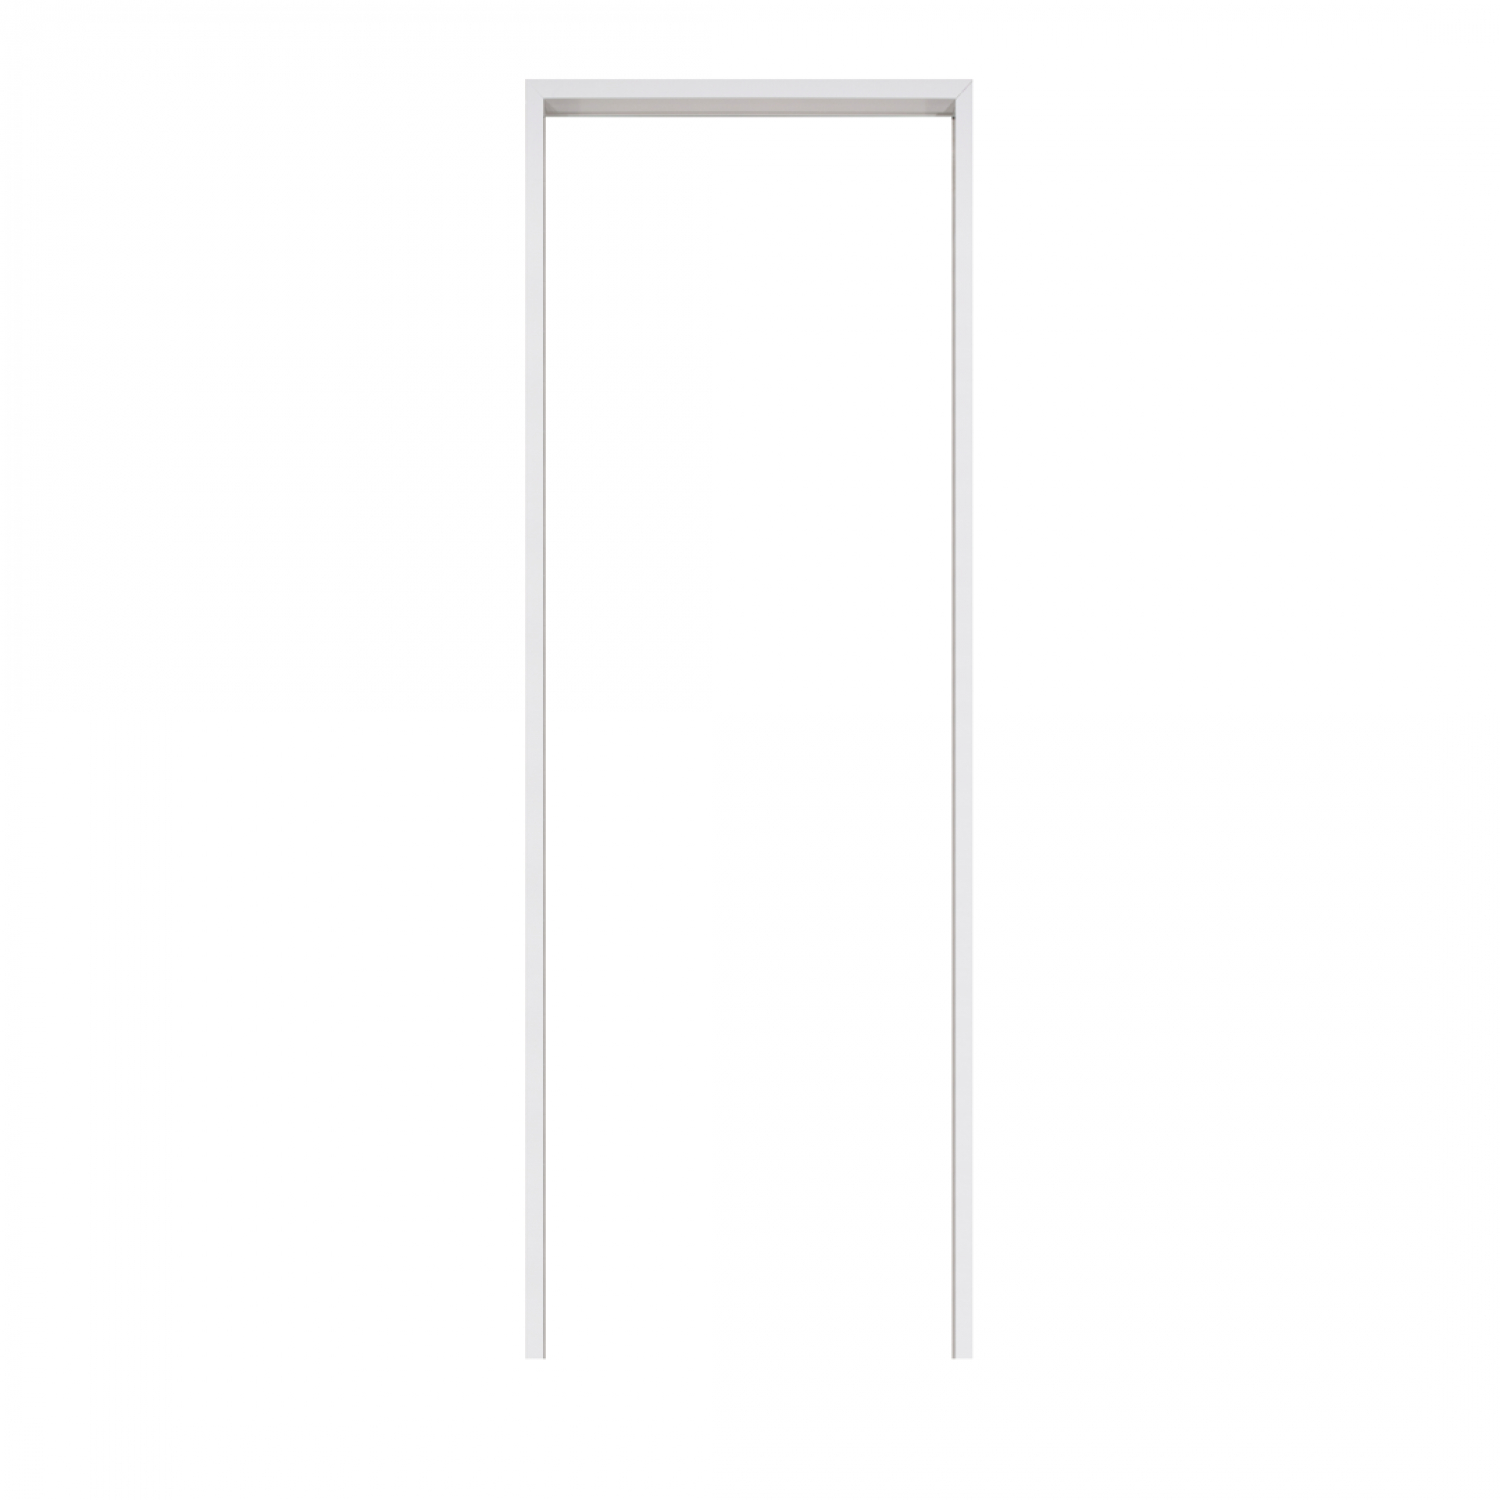 BATHIC วงกบประตู PVC 70x180ซม. สีขาว